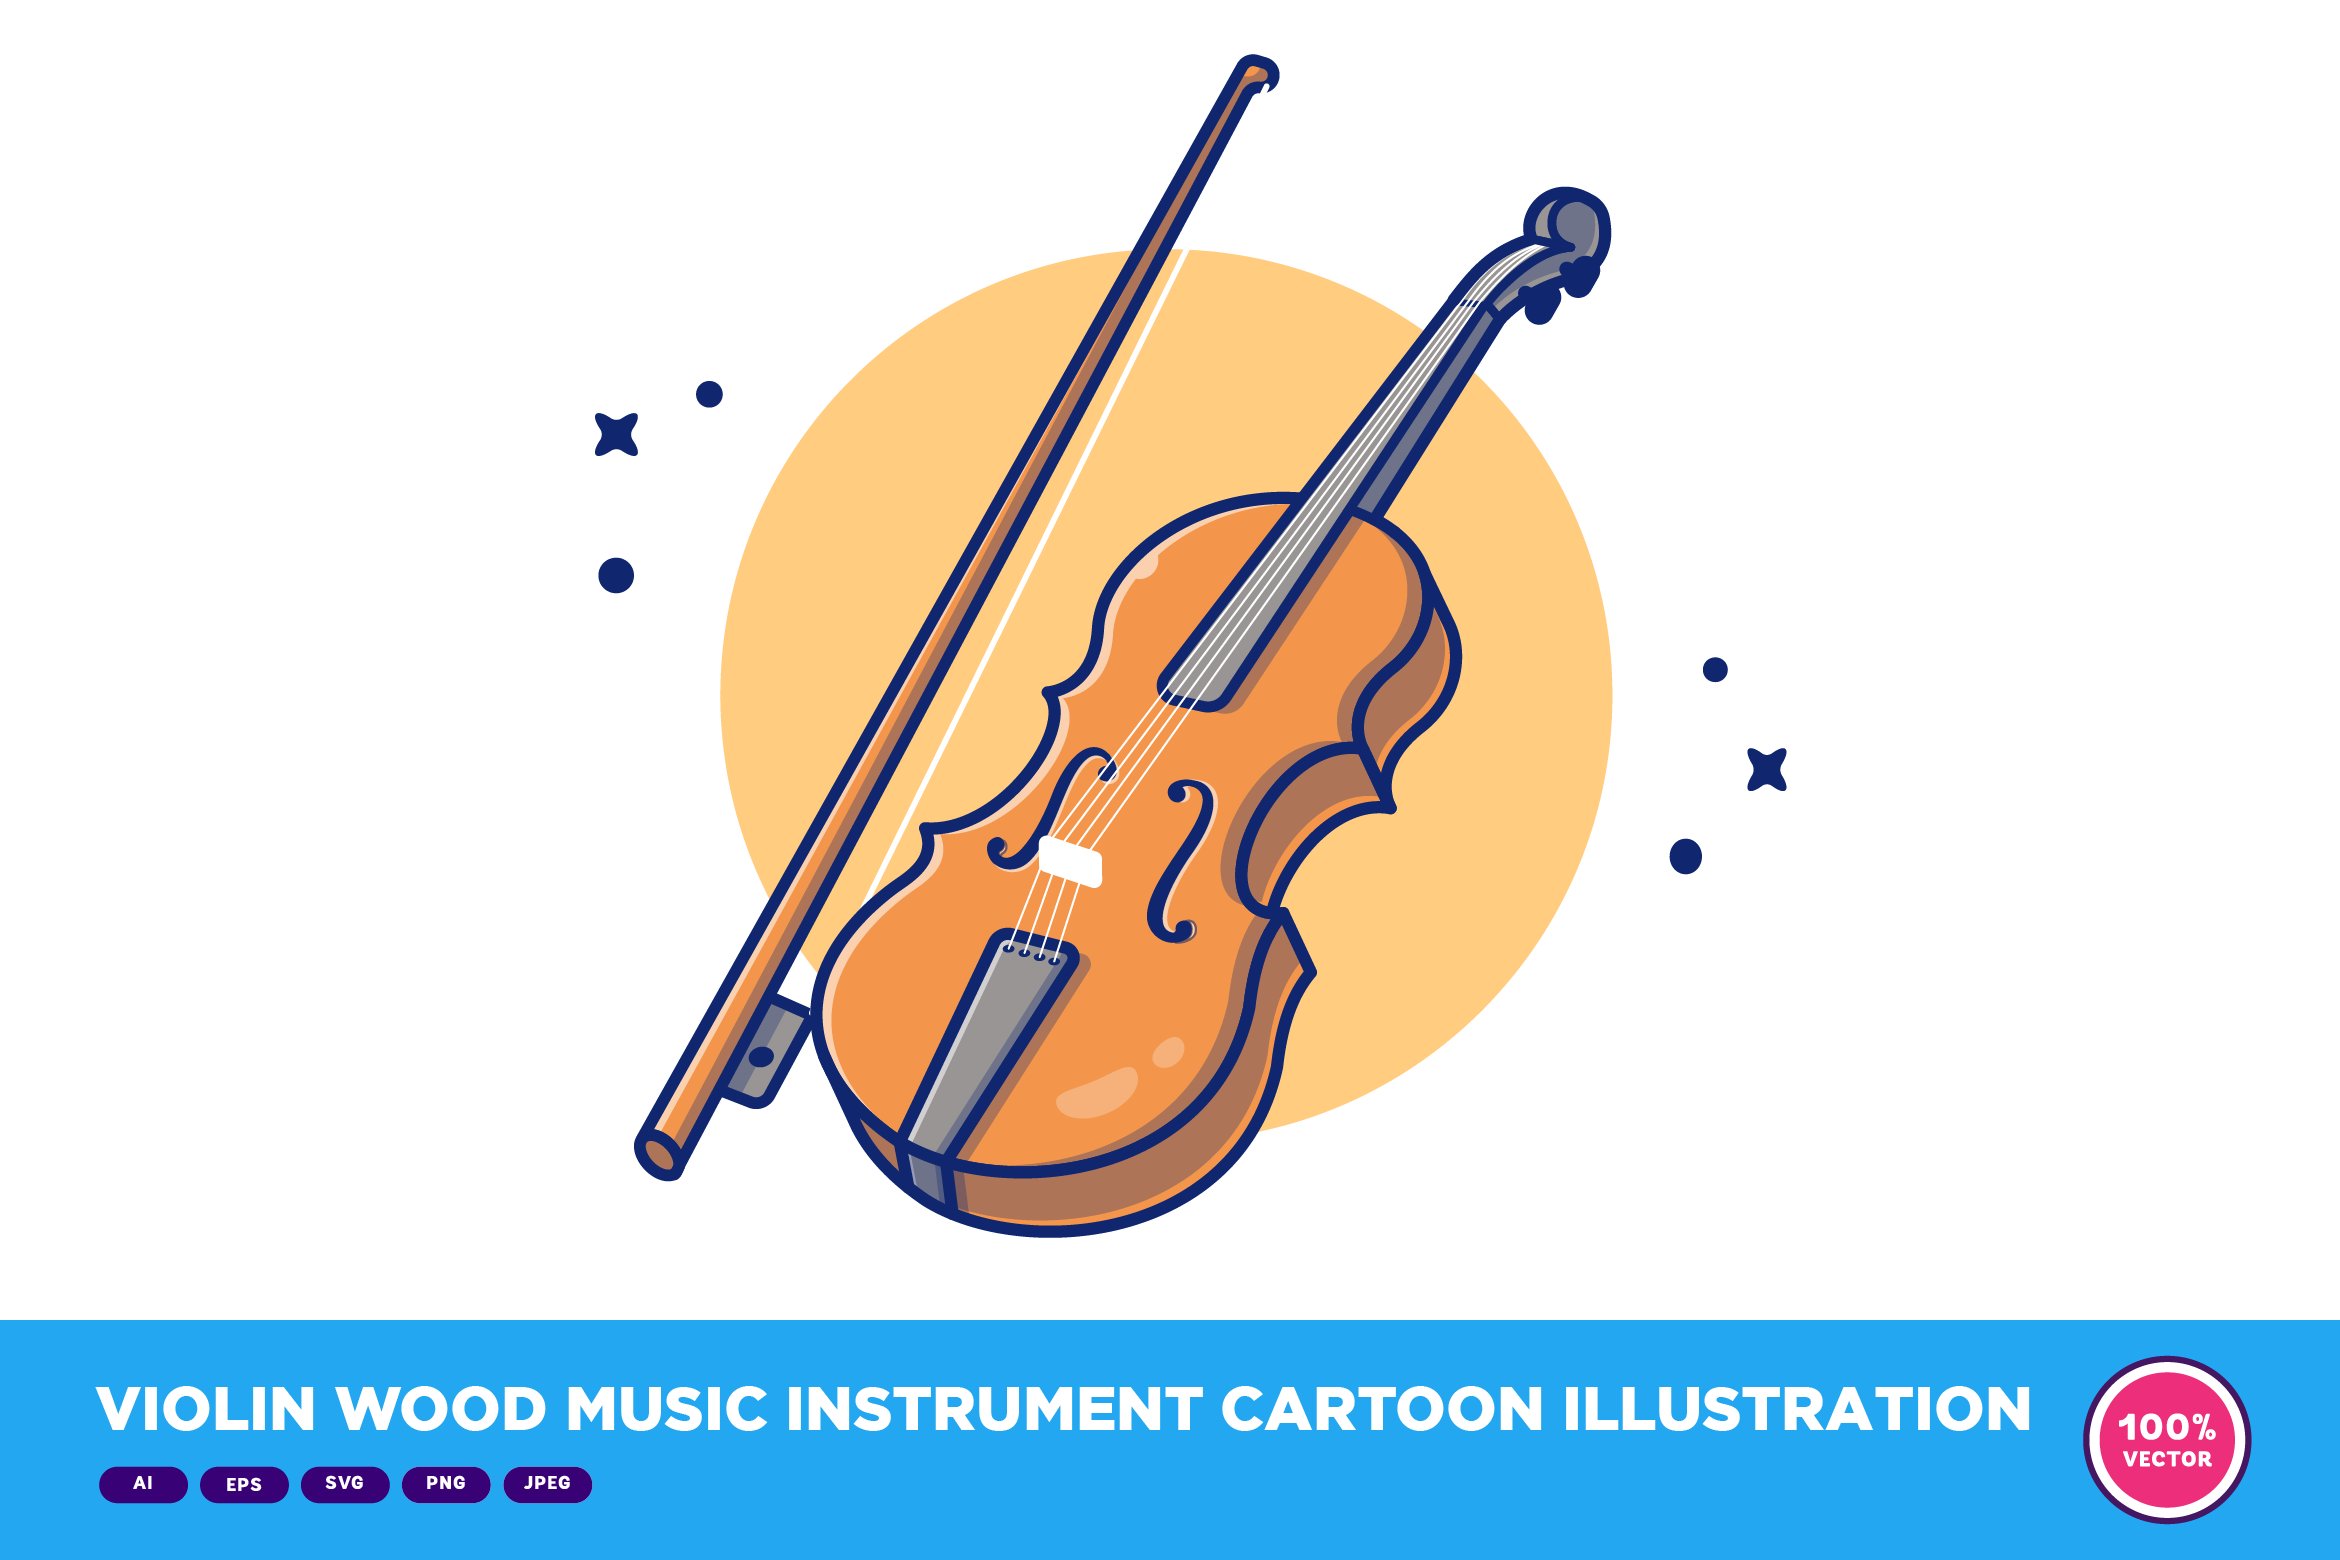 Violin Wood Music Instrument Cartoon cover image.